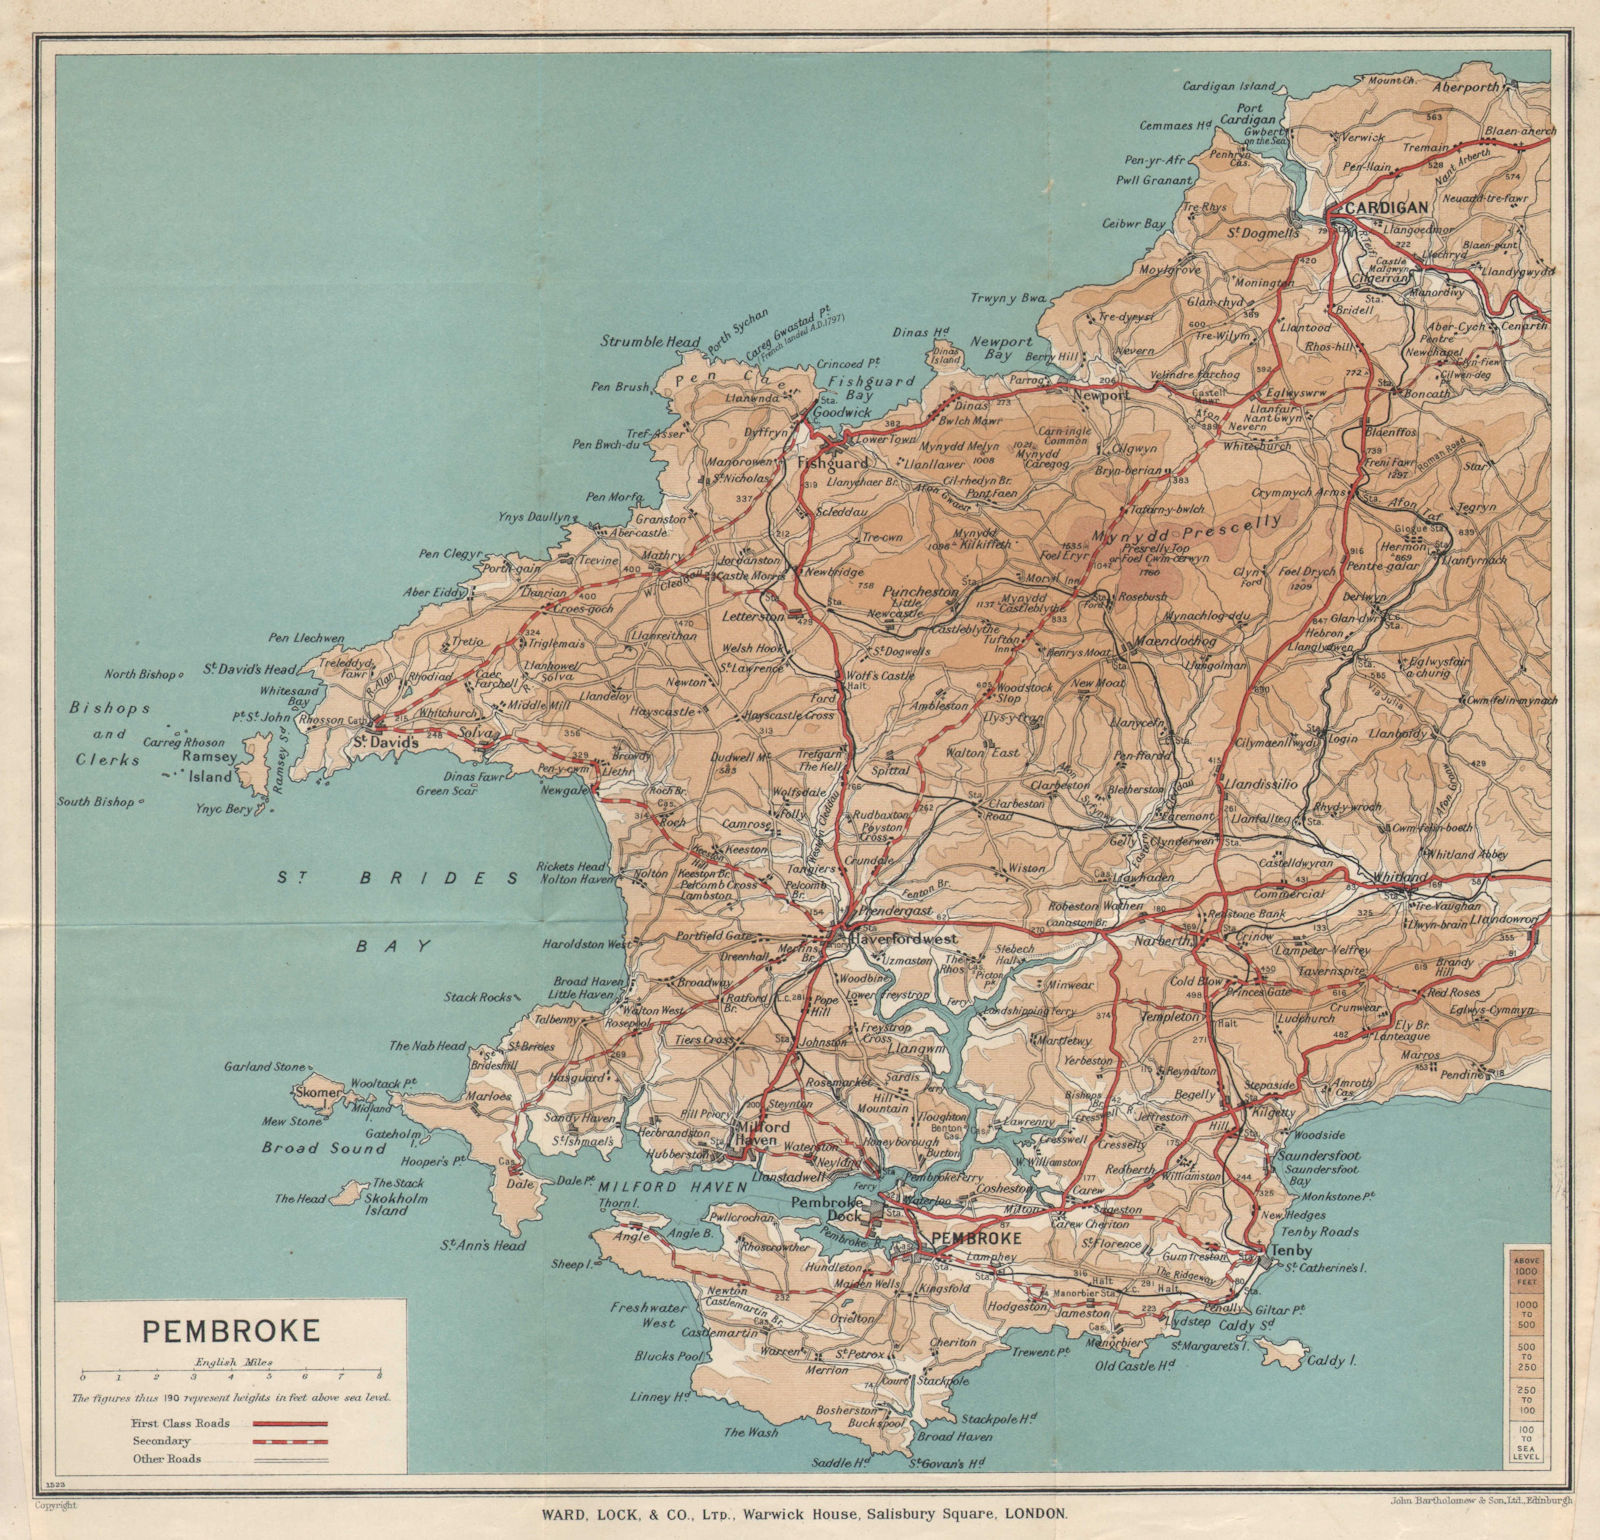 PEMBROKESHIRE. Cardigan Pembroke Tenby St David's. Wales. WARD LOCK 1938 map